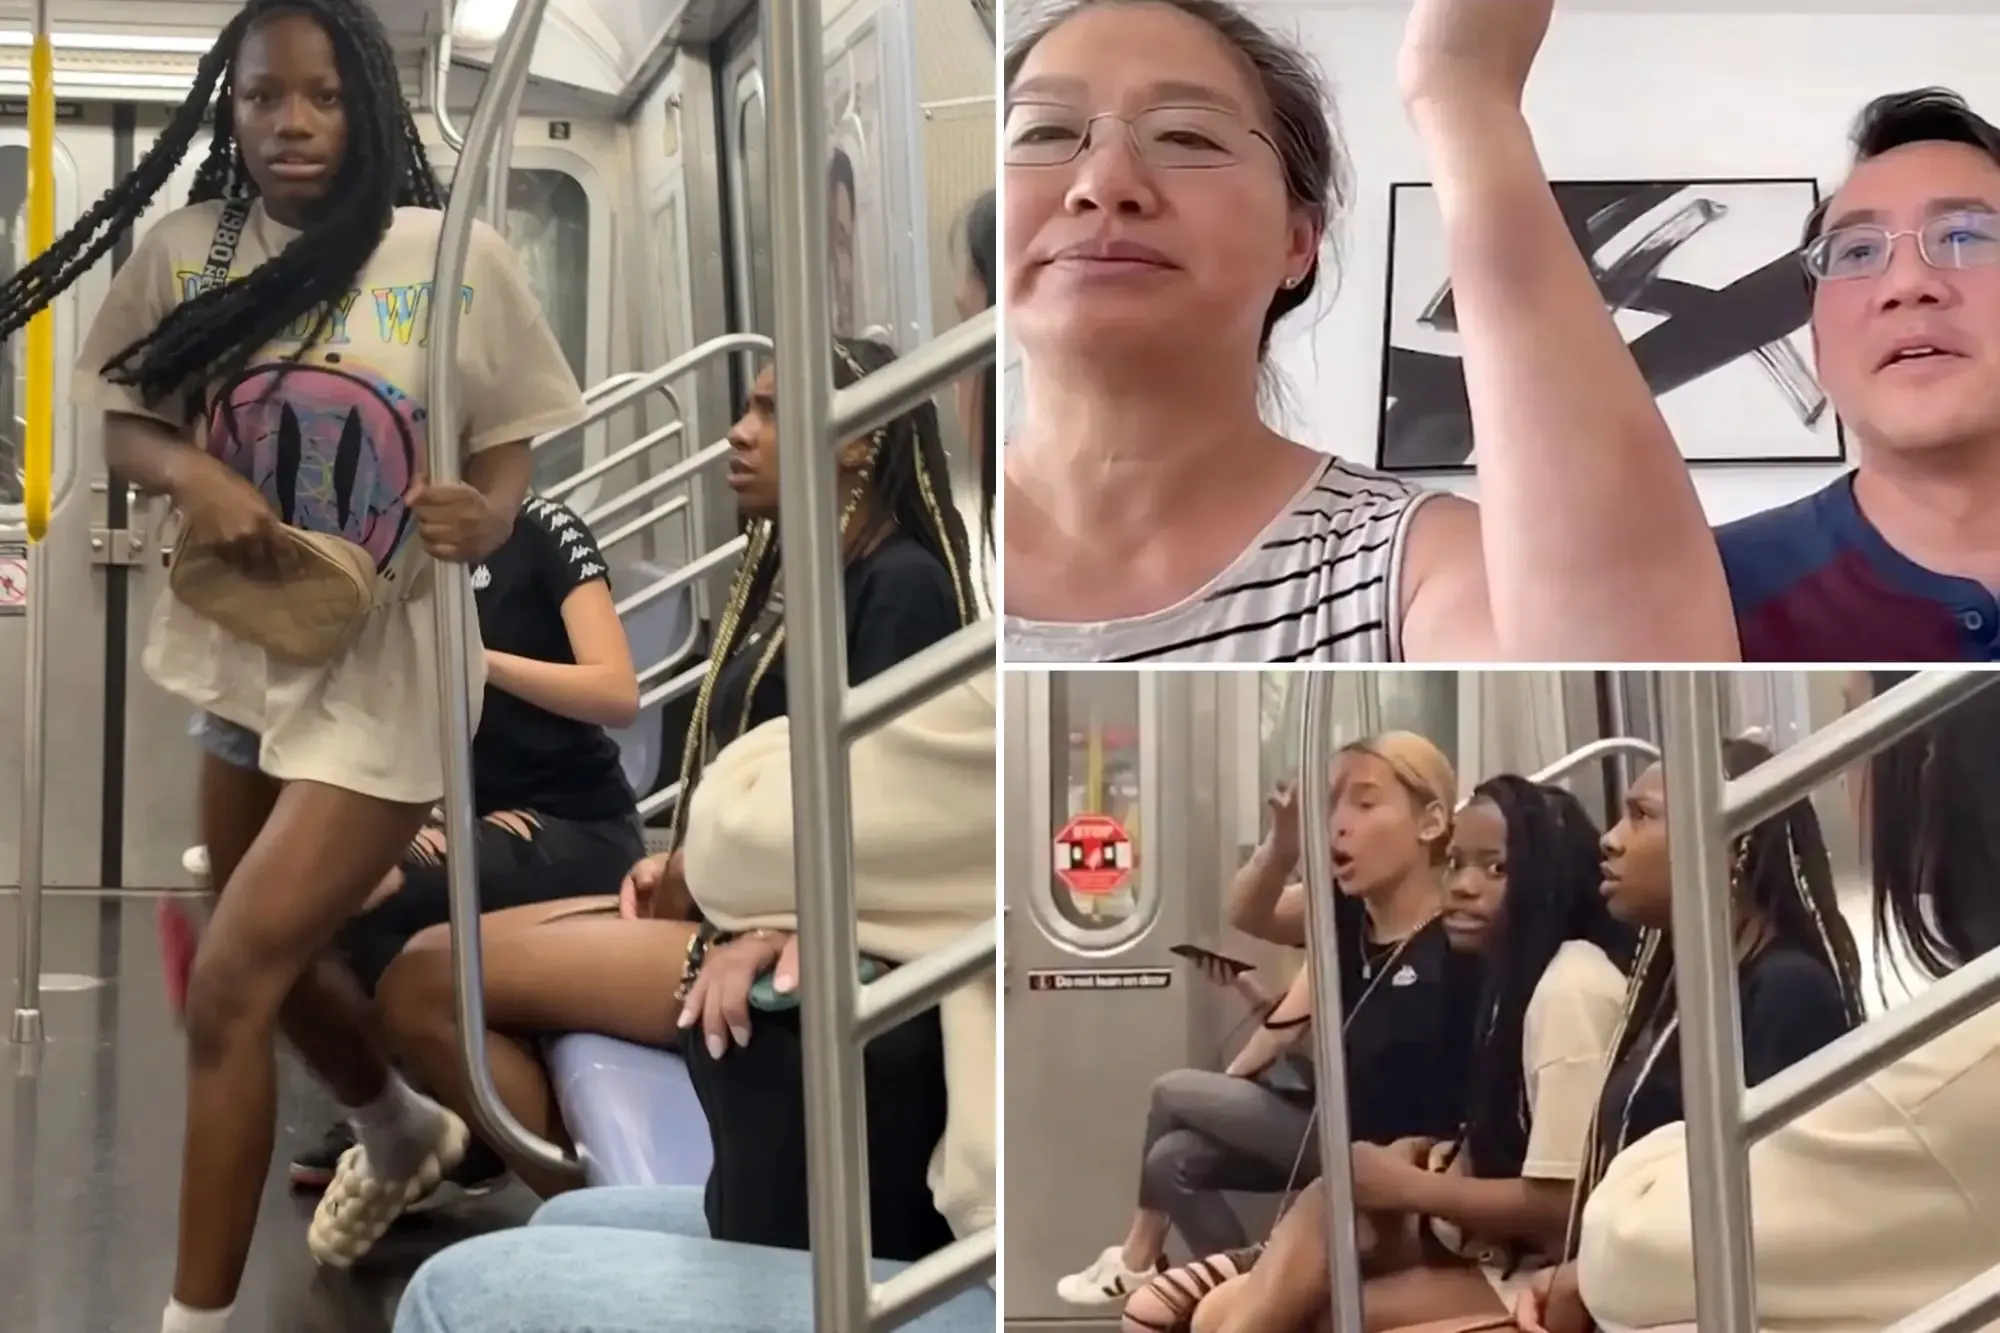 Teenage Terror on the Tracks: New York Subway Passengers Assaulted in Shocking Plank Attacks